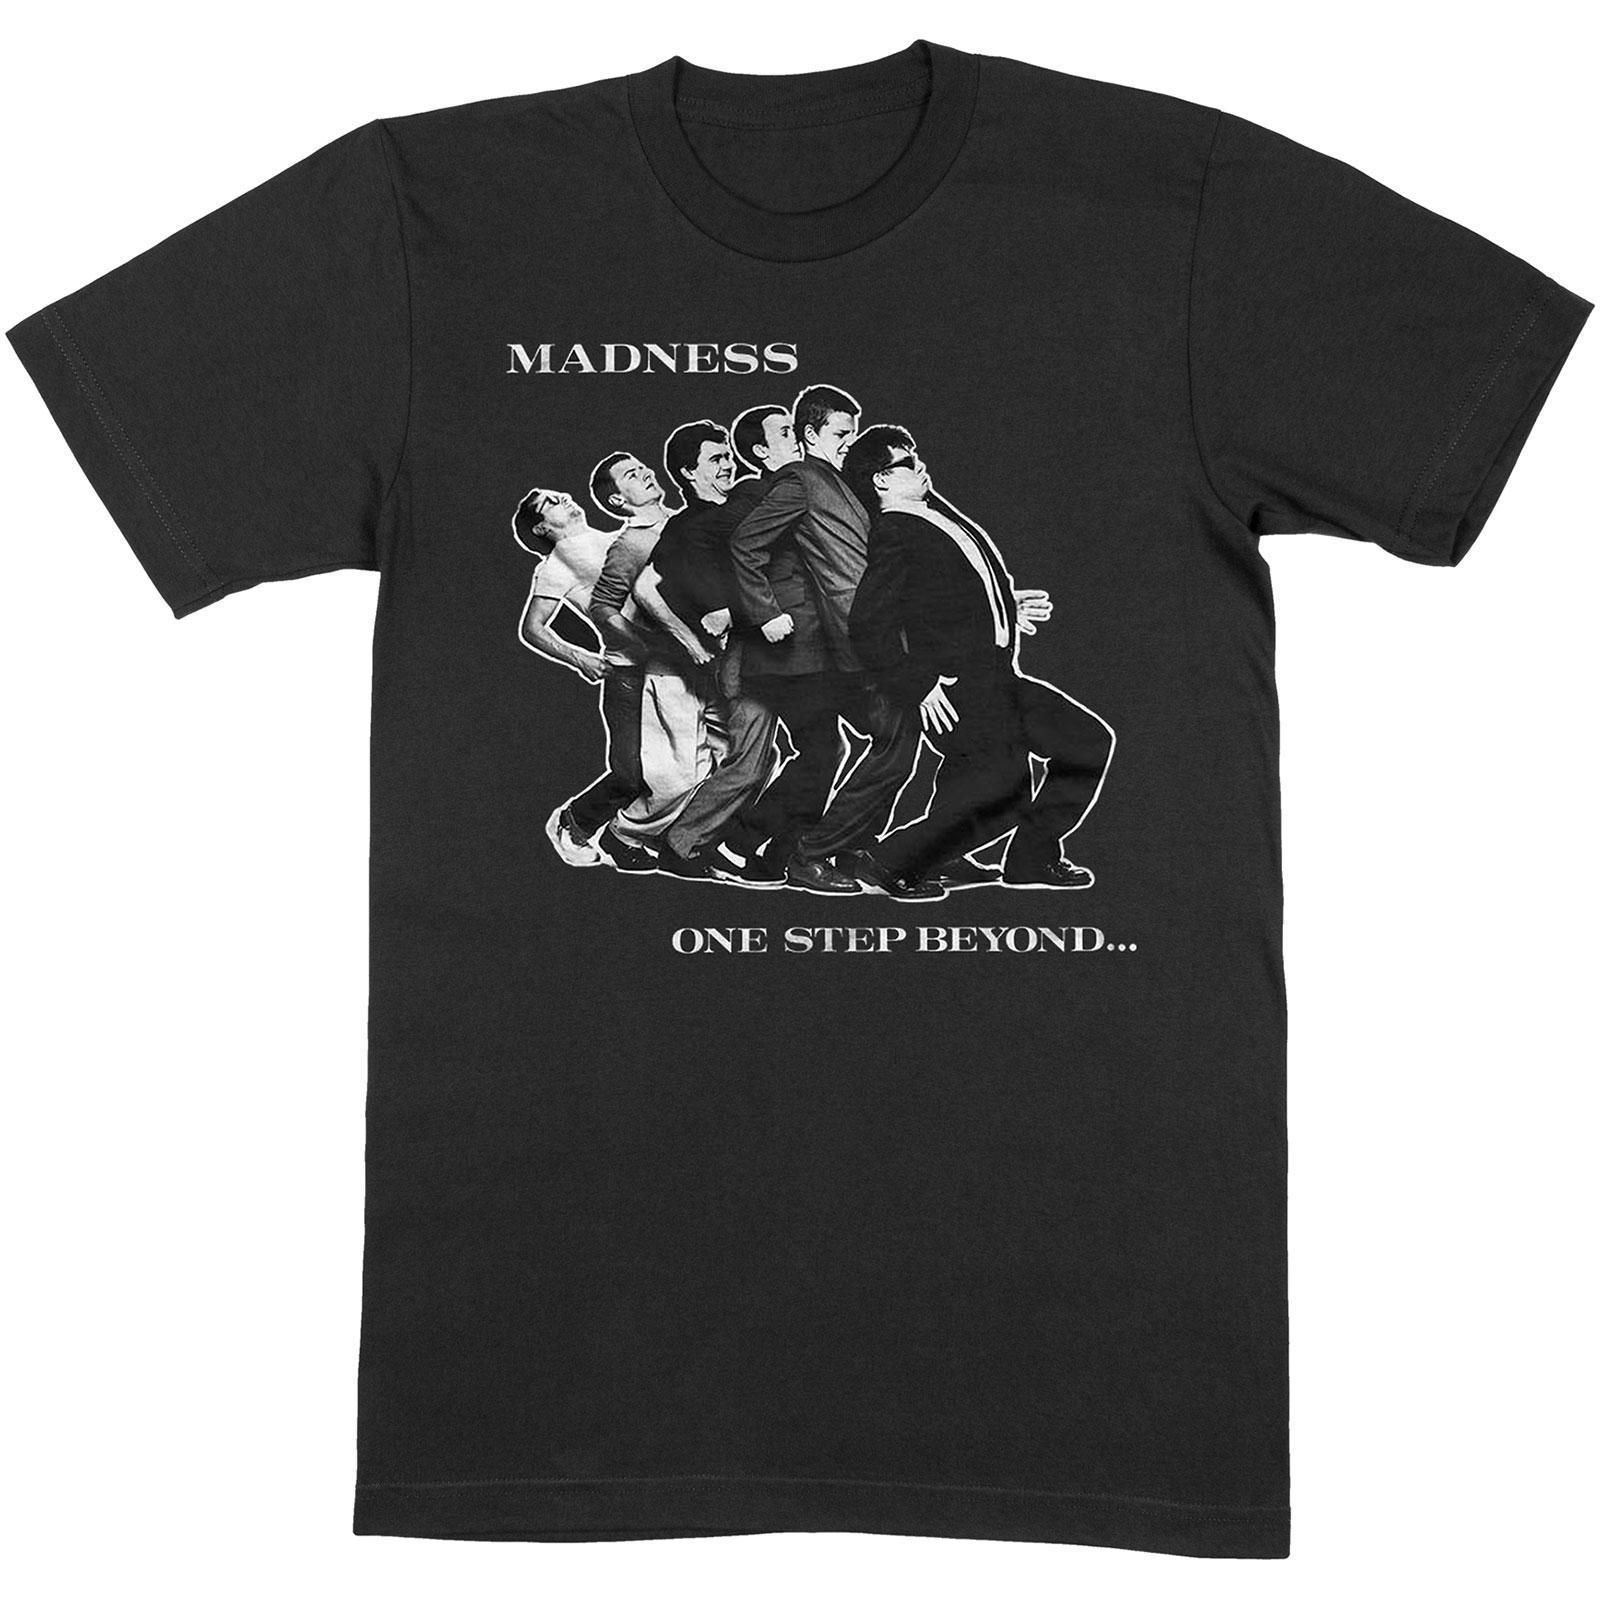 Madness Unisex Adult One Step Beyond Cotton T-Shirt (Black) (XXL)